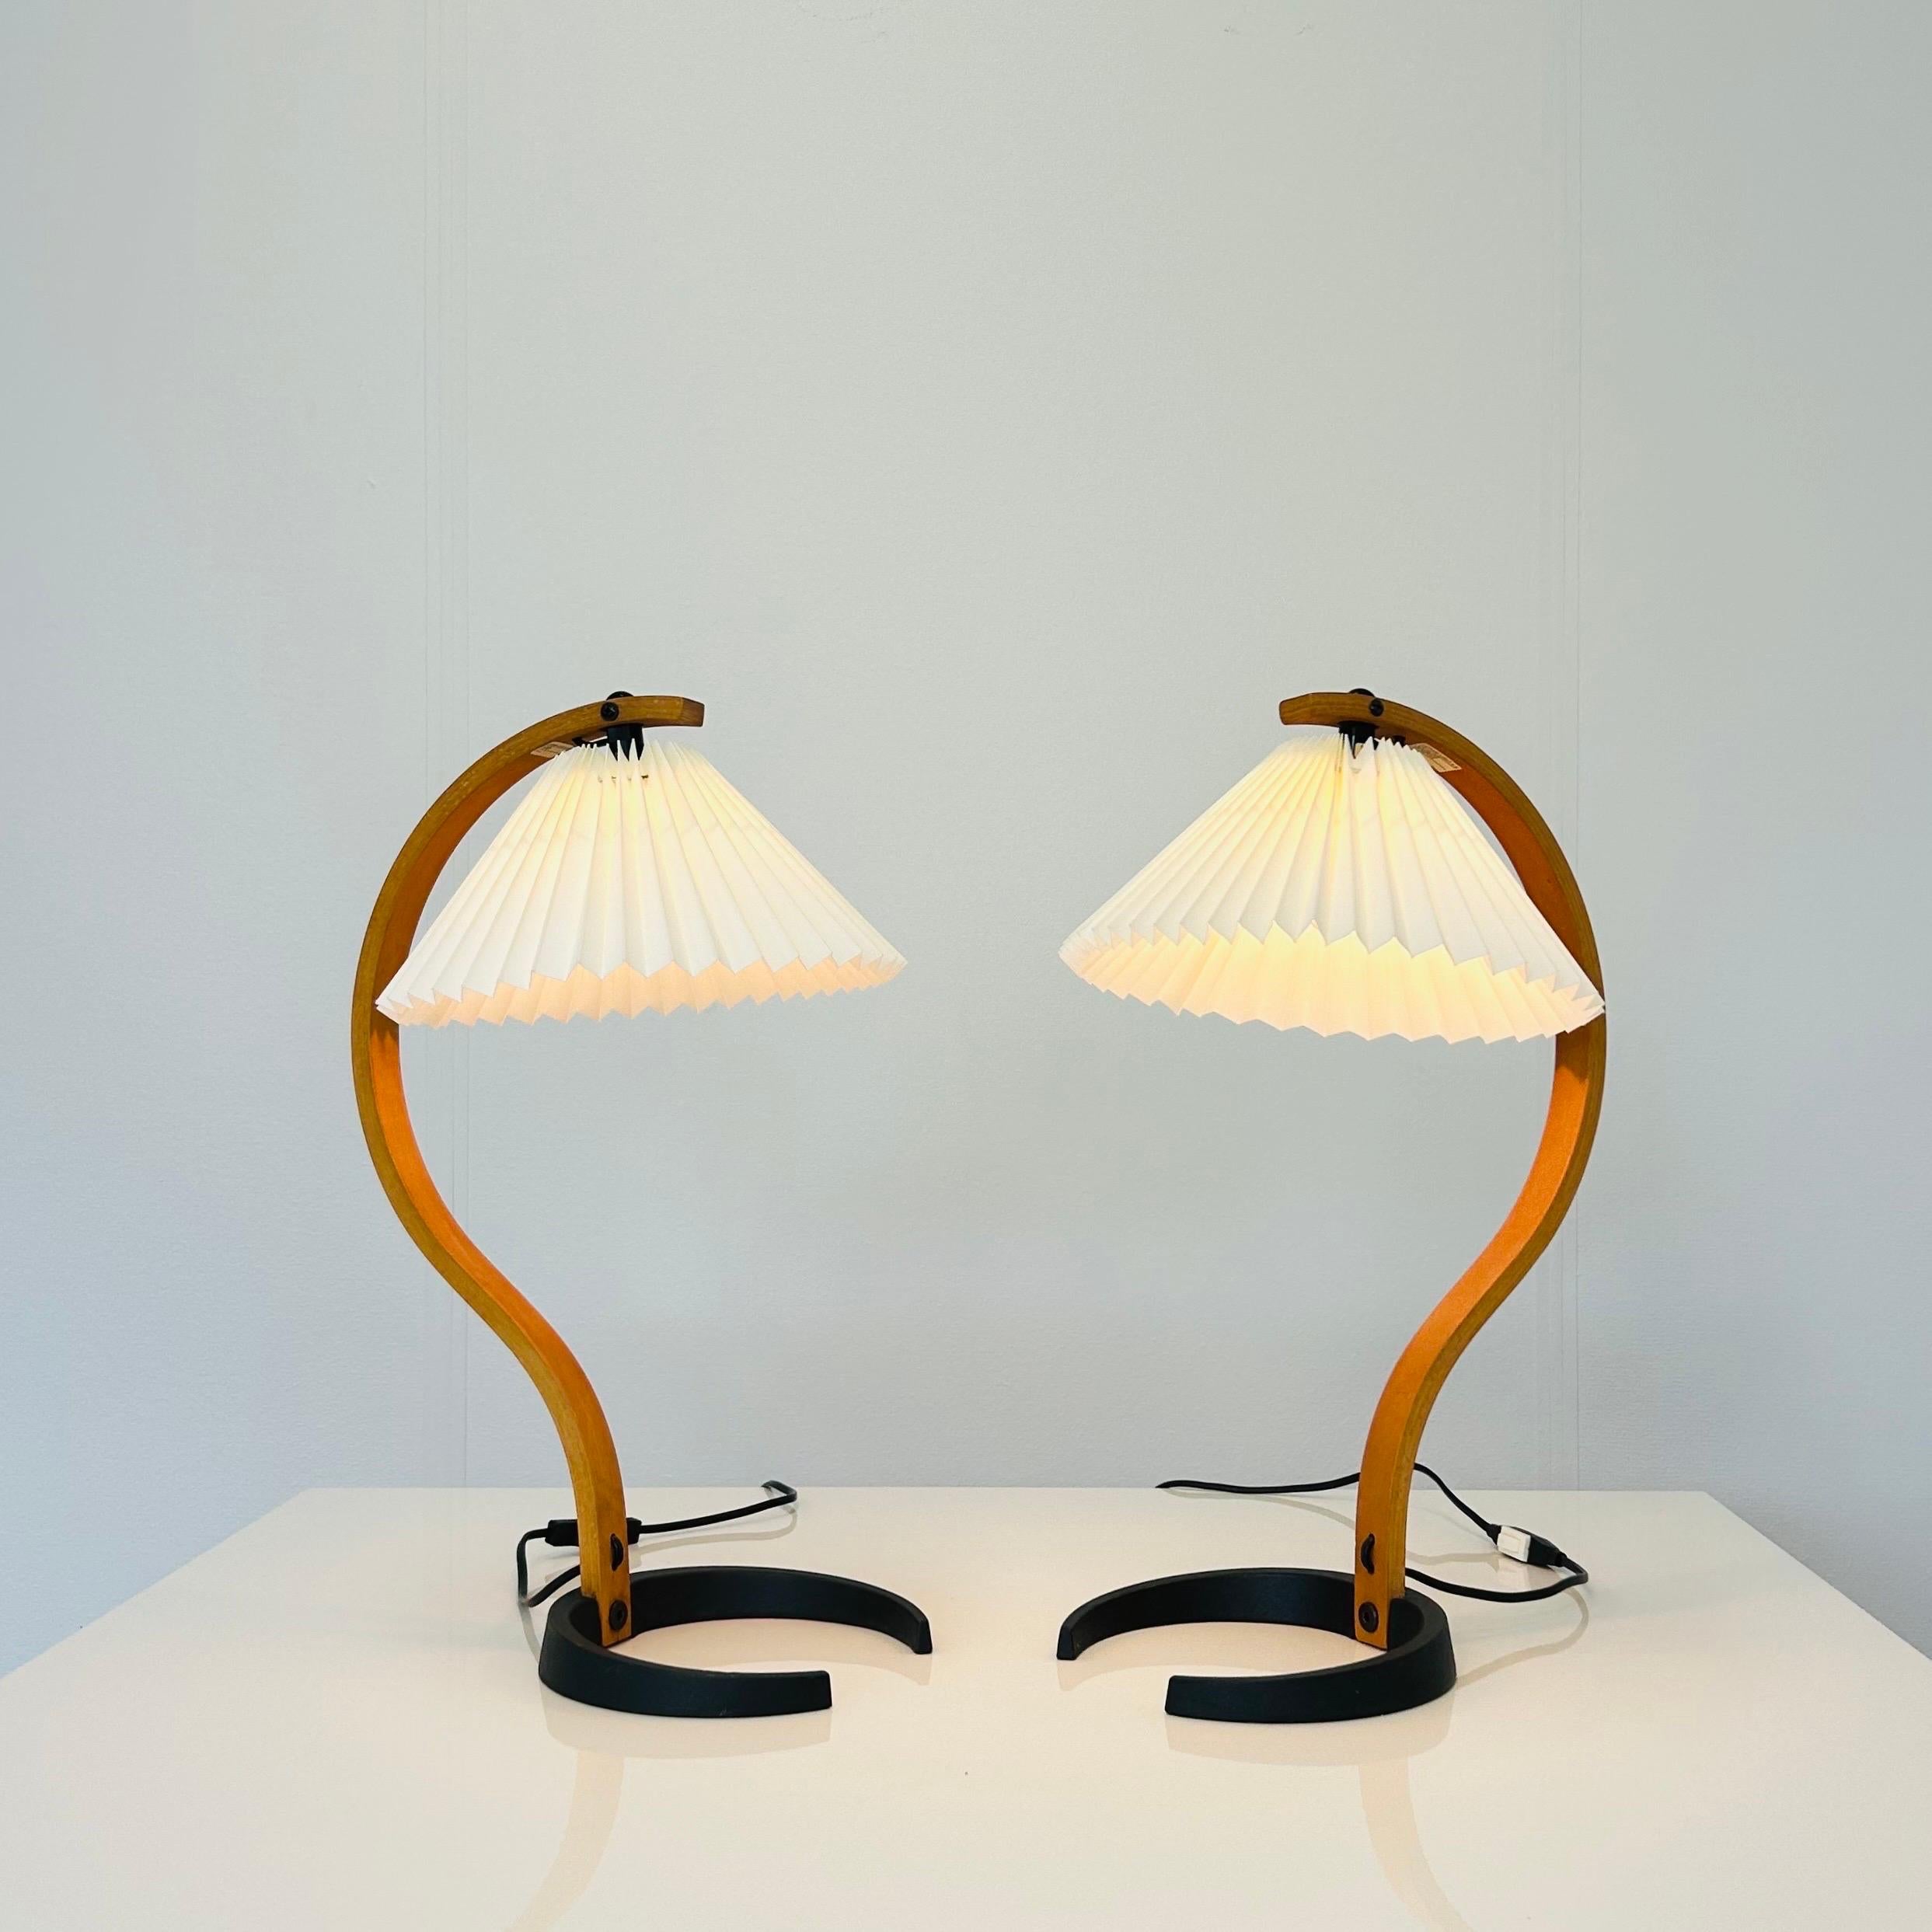 Set of Original Danish Caprani Desk Lamps, 1970s, Denmark For Sale 4